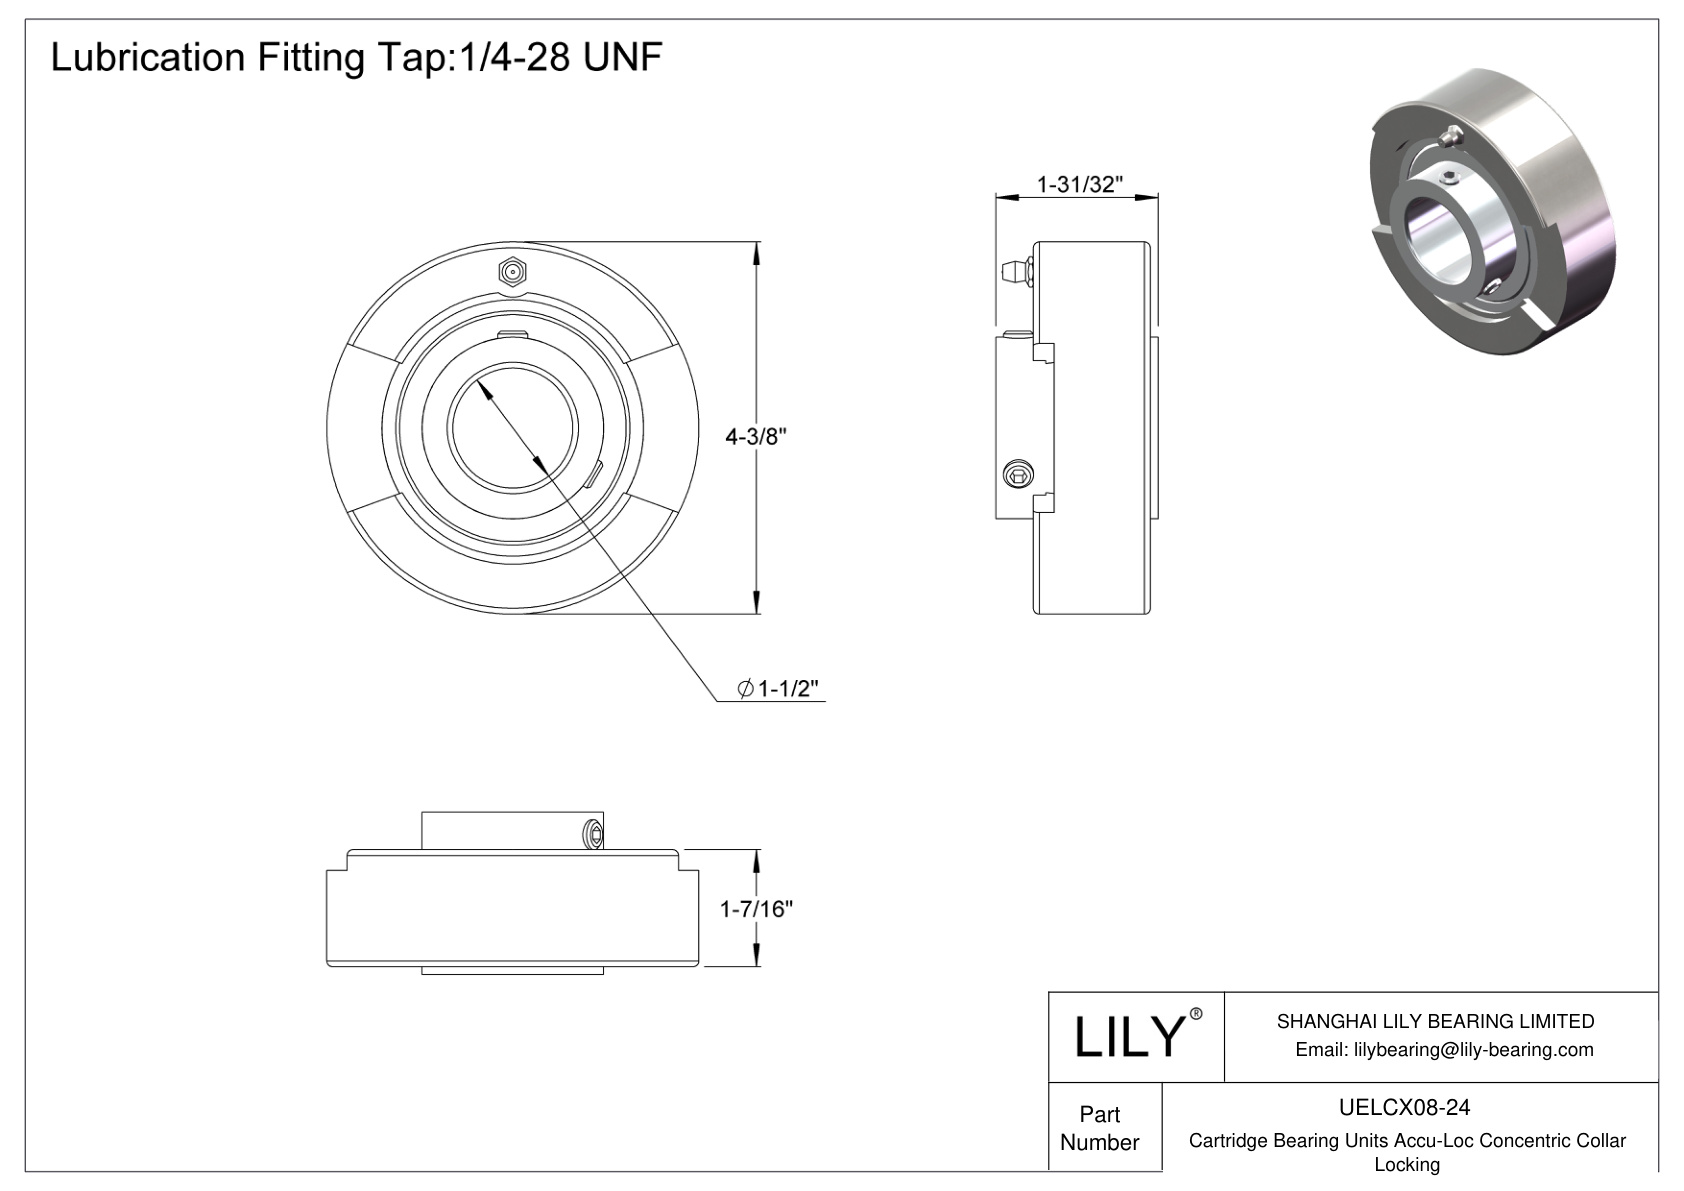 UELCX08-24 Cartridge Bearing Units Accu-Loc Concentric Collar Locking cad drawing